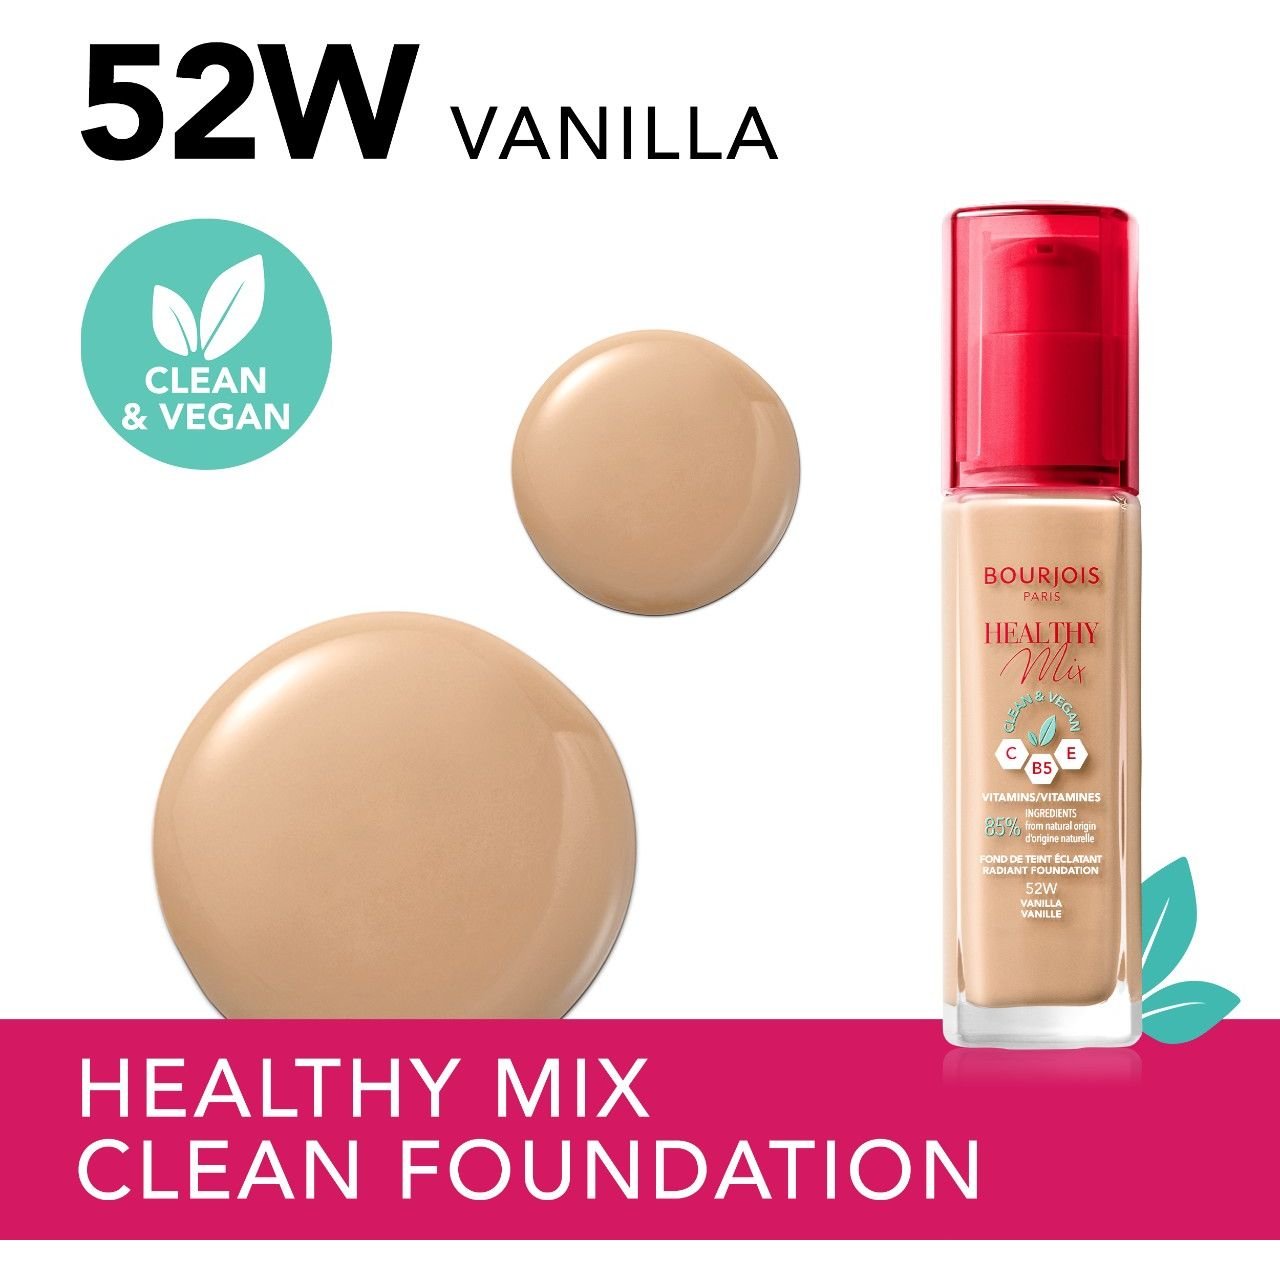 Тональная основа Bourjois Healthy Mix Clean & Vegan тон 52W (Vanilla) 30 мл - фото 3